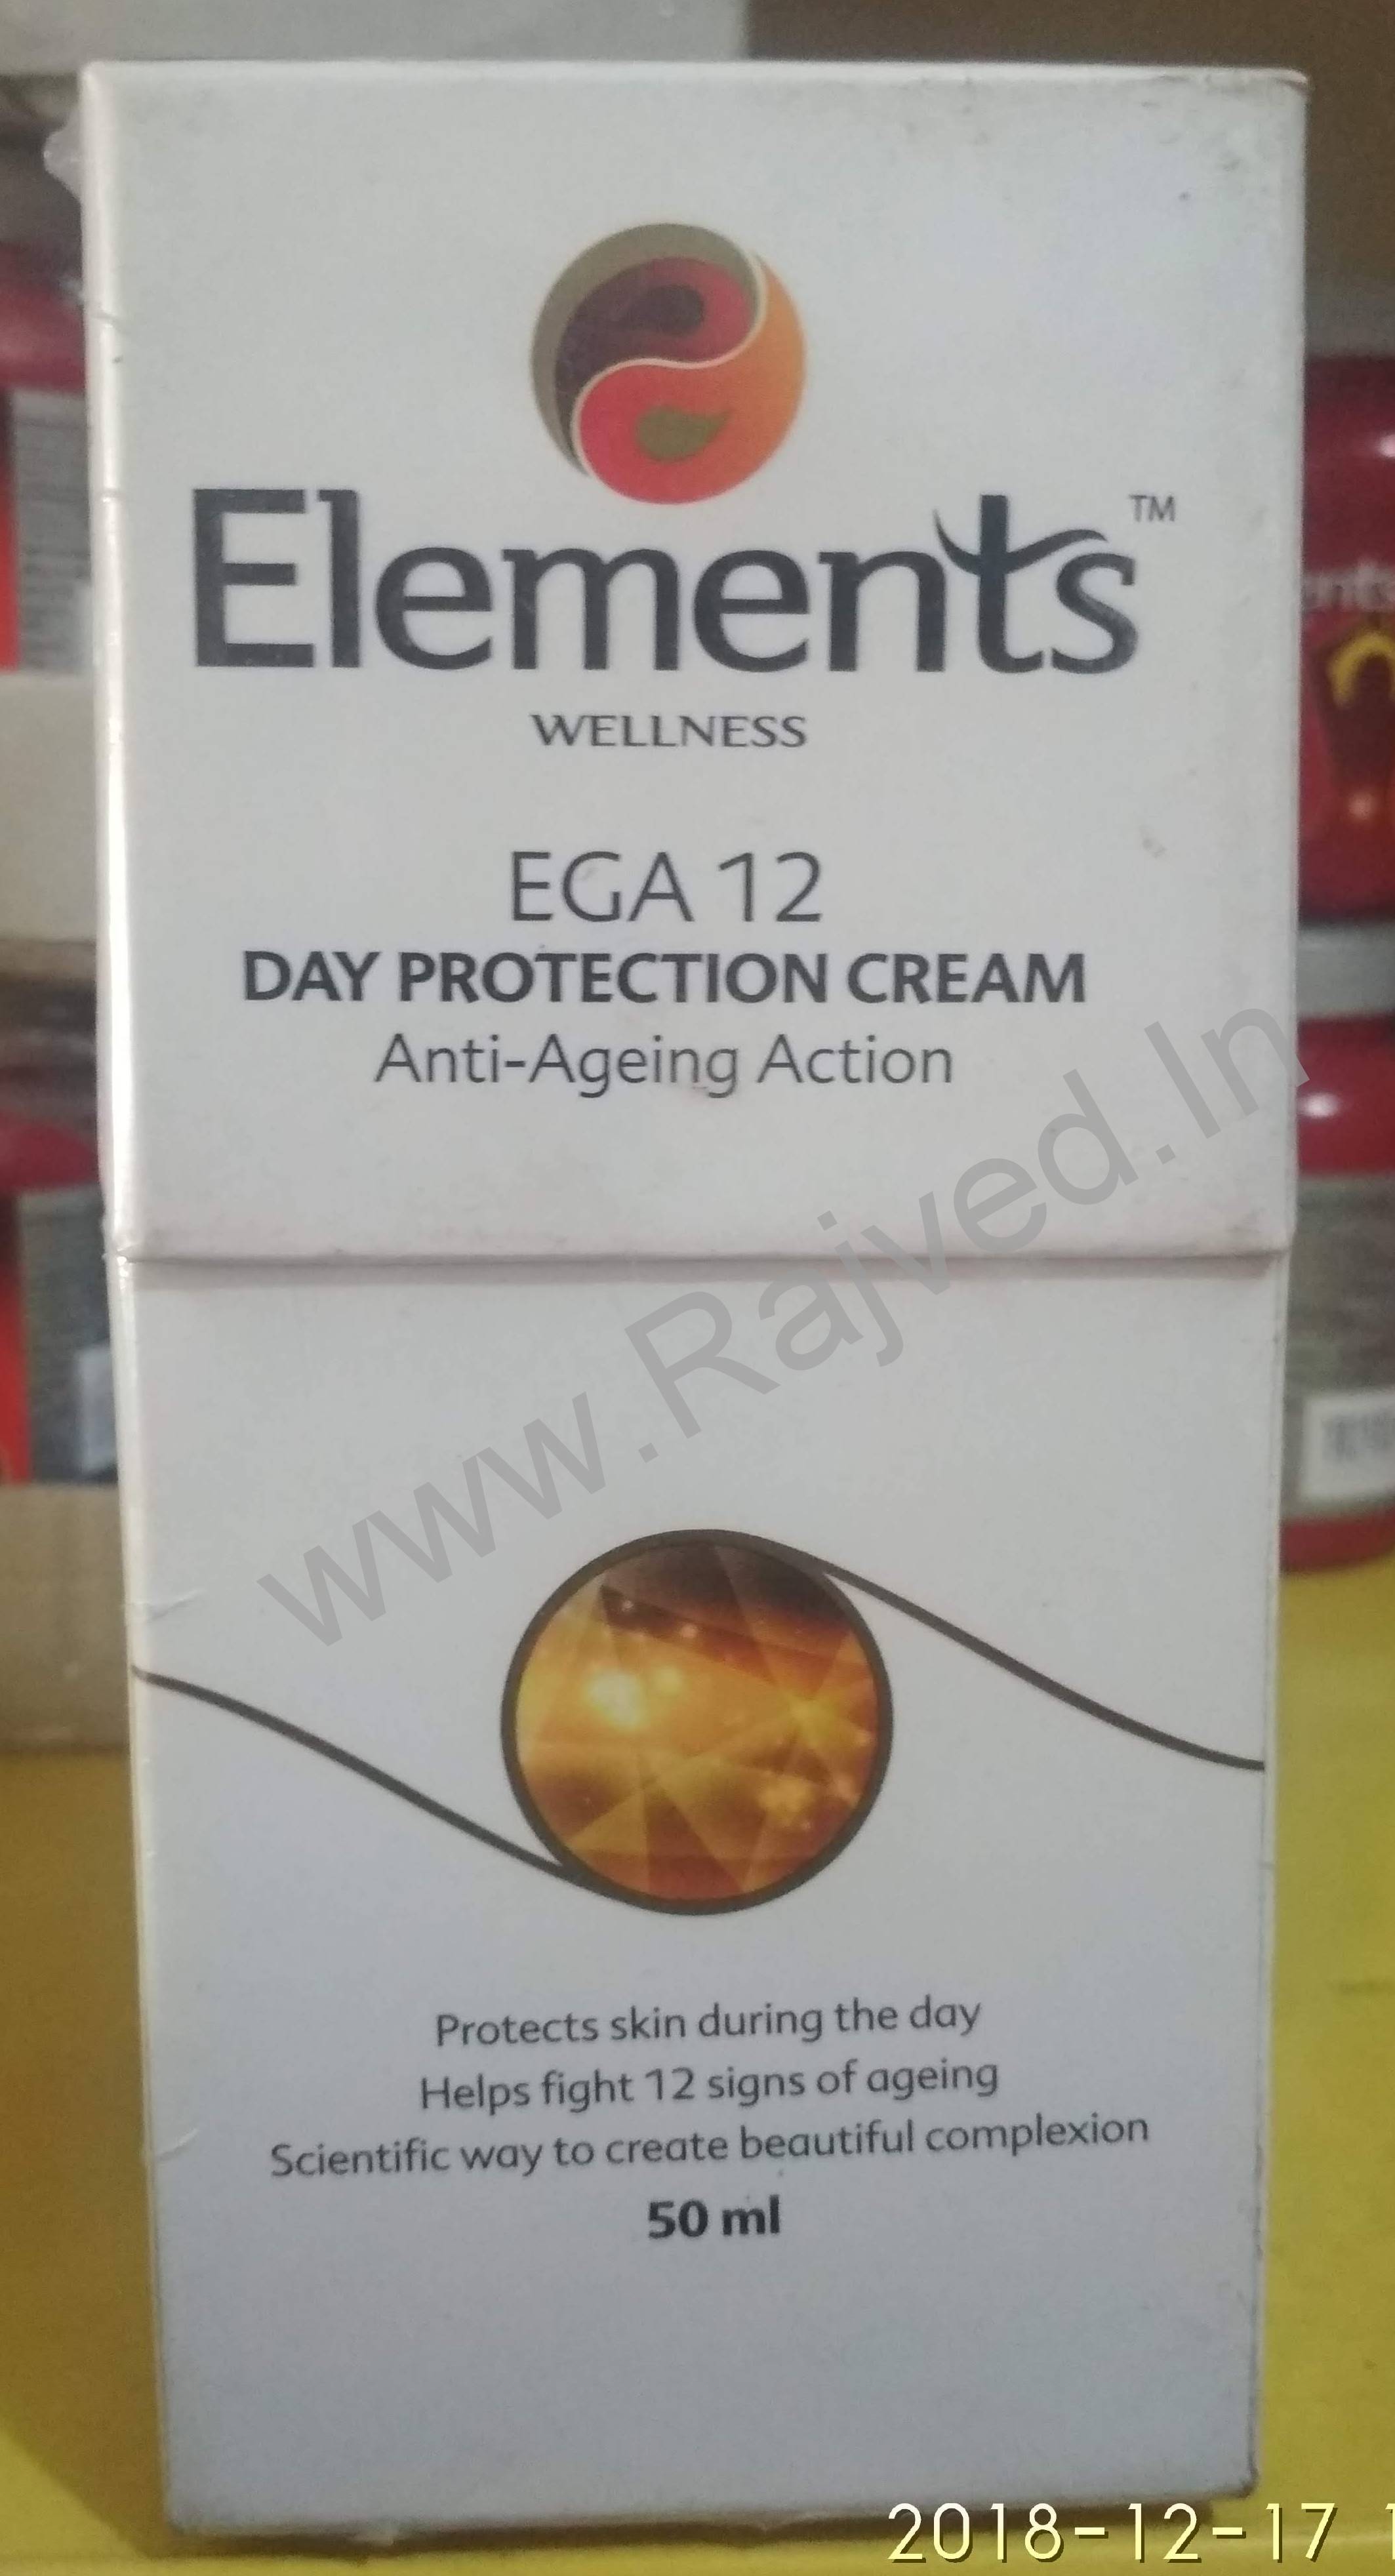 ega 12 day protection cream anti ageing action 50 ml elements